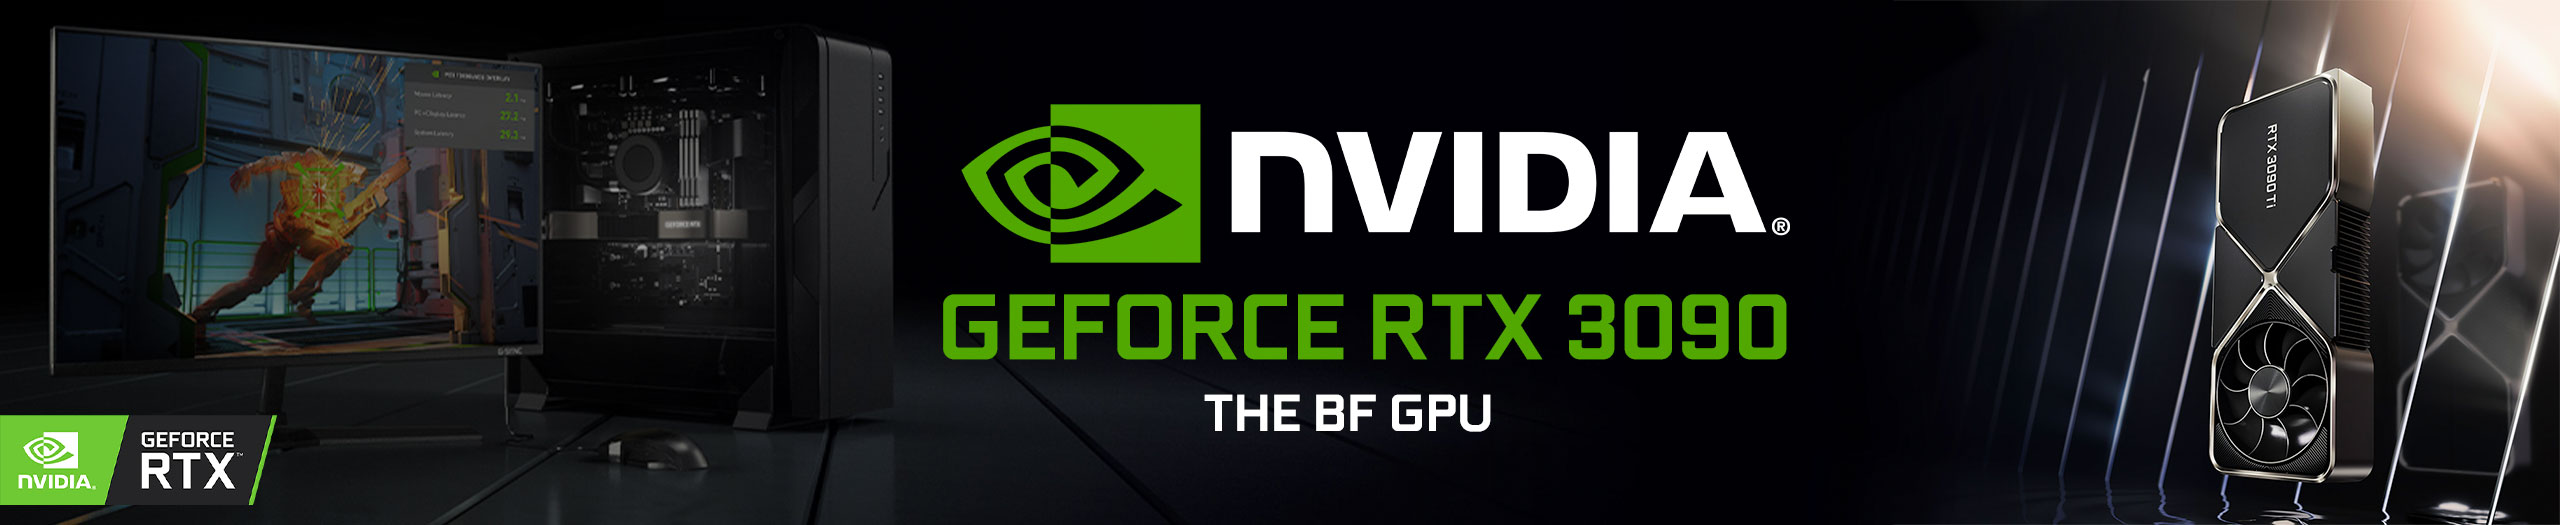 NVIDIA Geforce RTX 3090 Best Deals